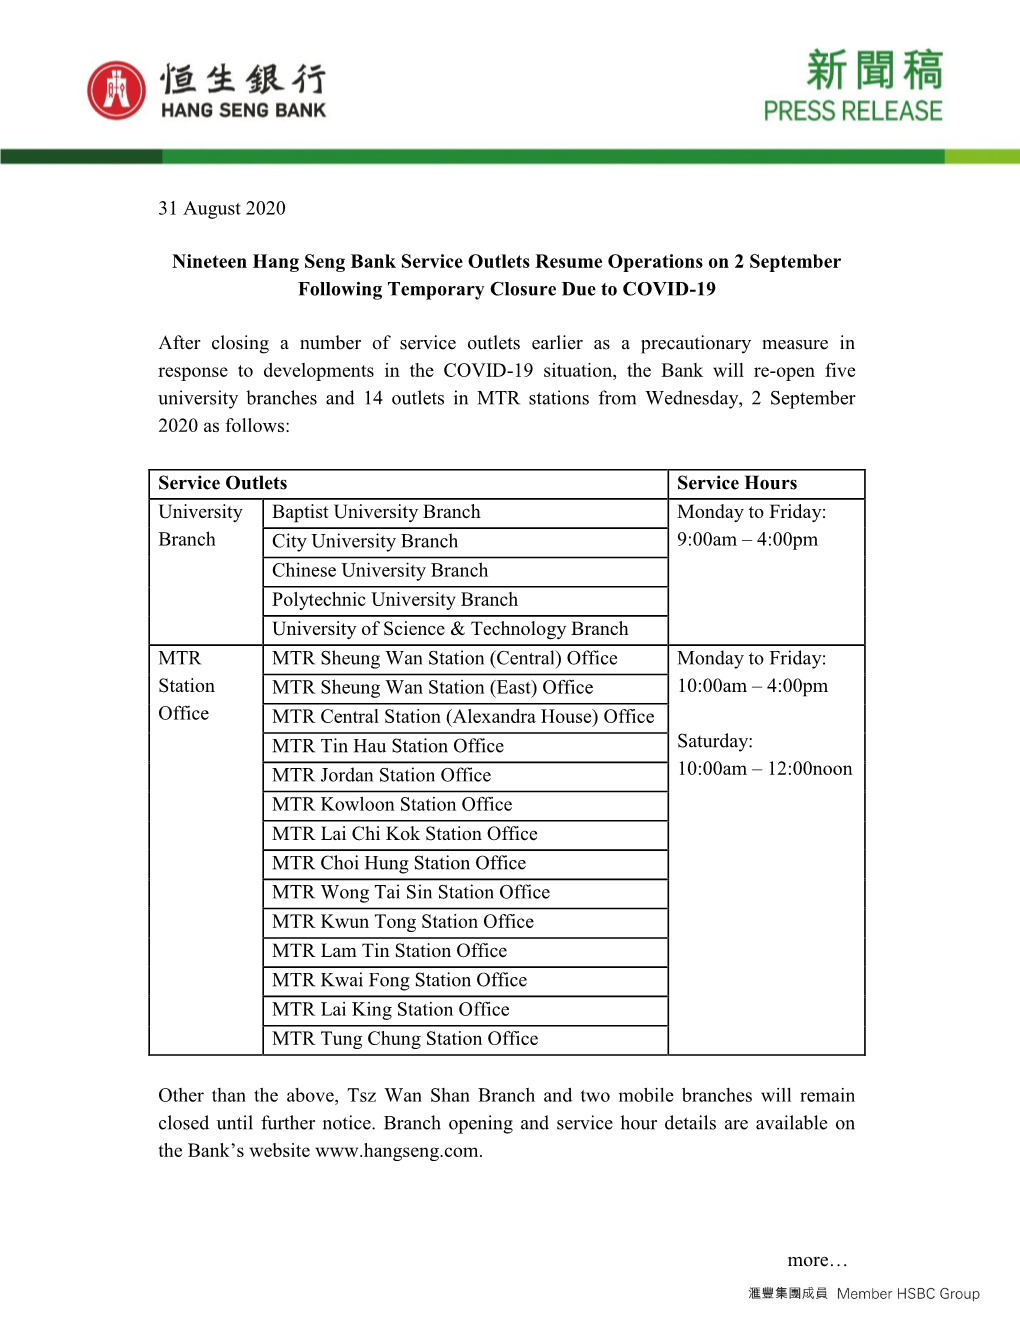 31 August 2020 Nineteen Hang Seng Bank Service Outlets Resume